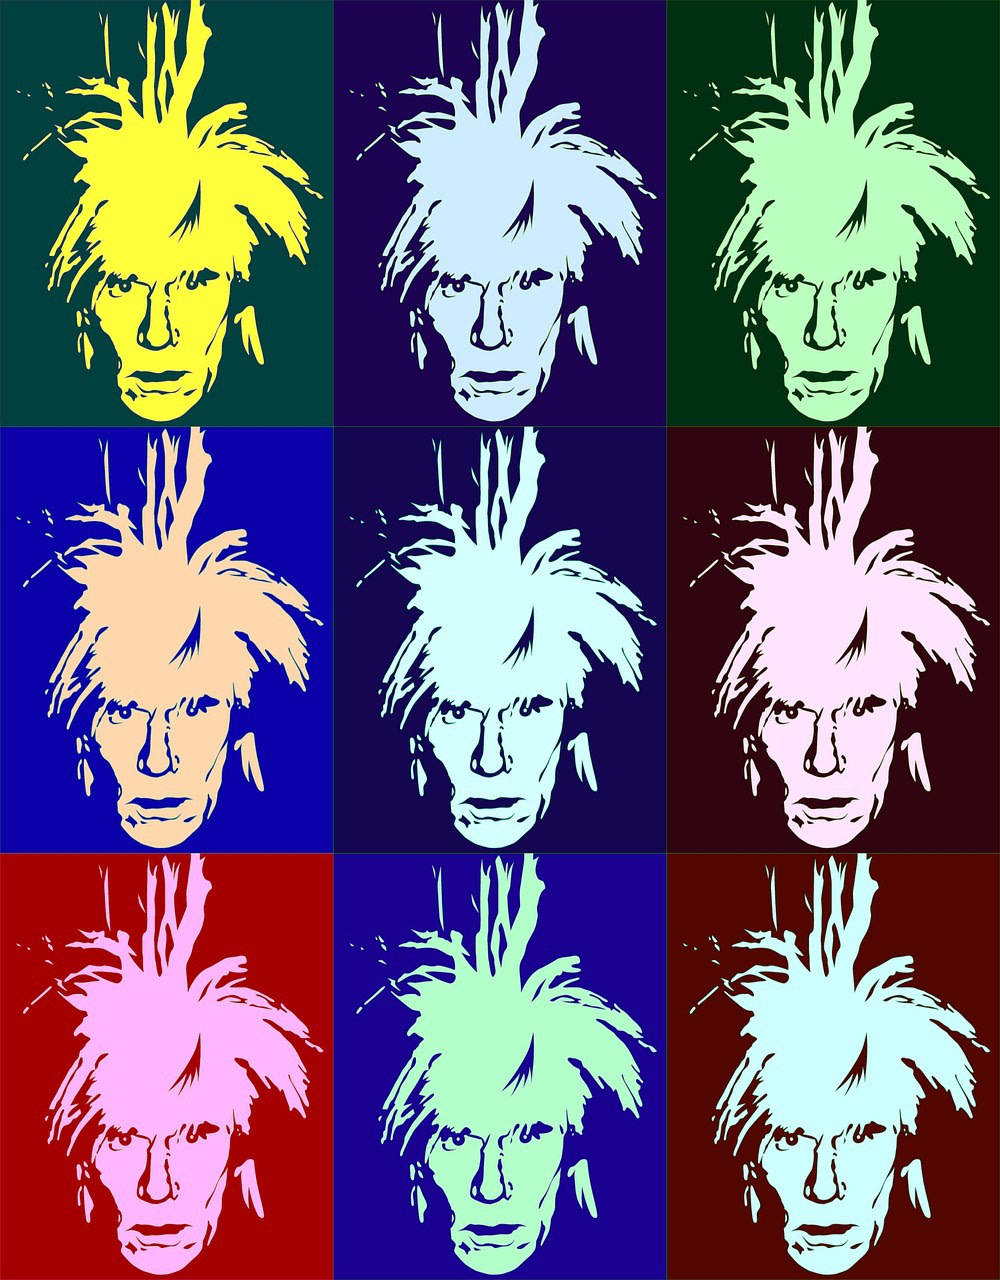 Andy Warhol: A Revolutionary Icon